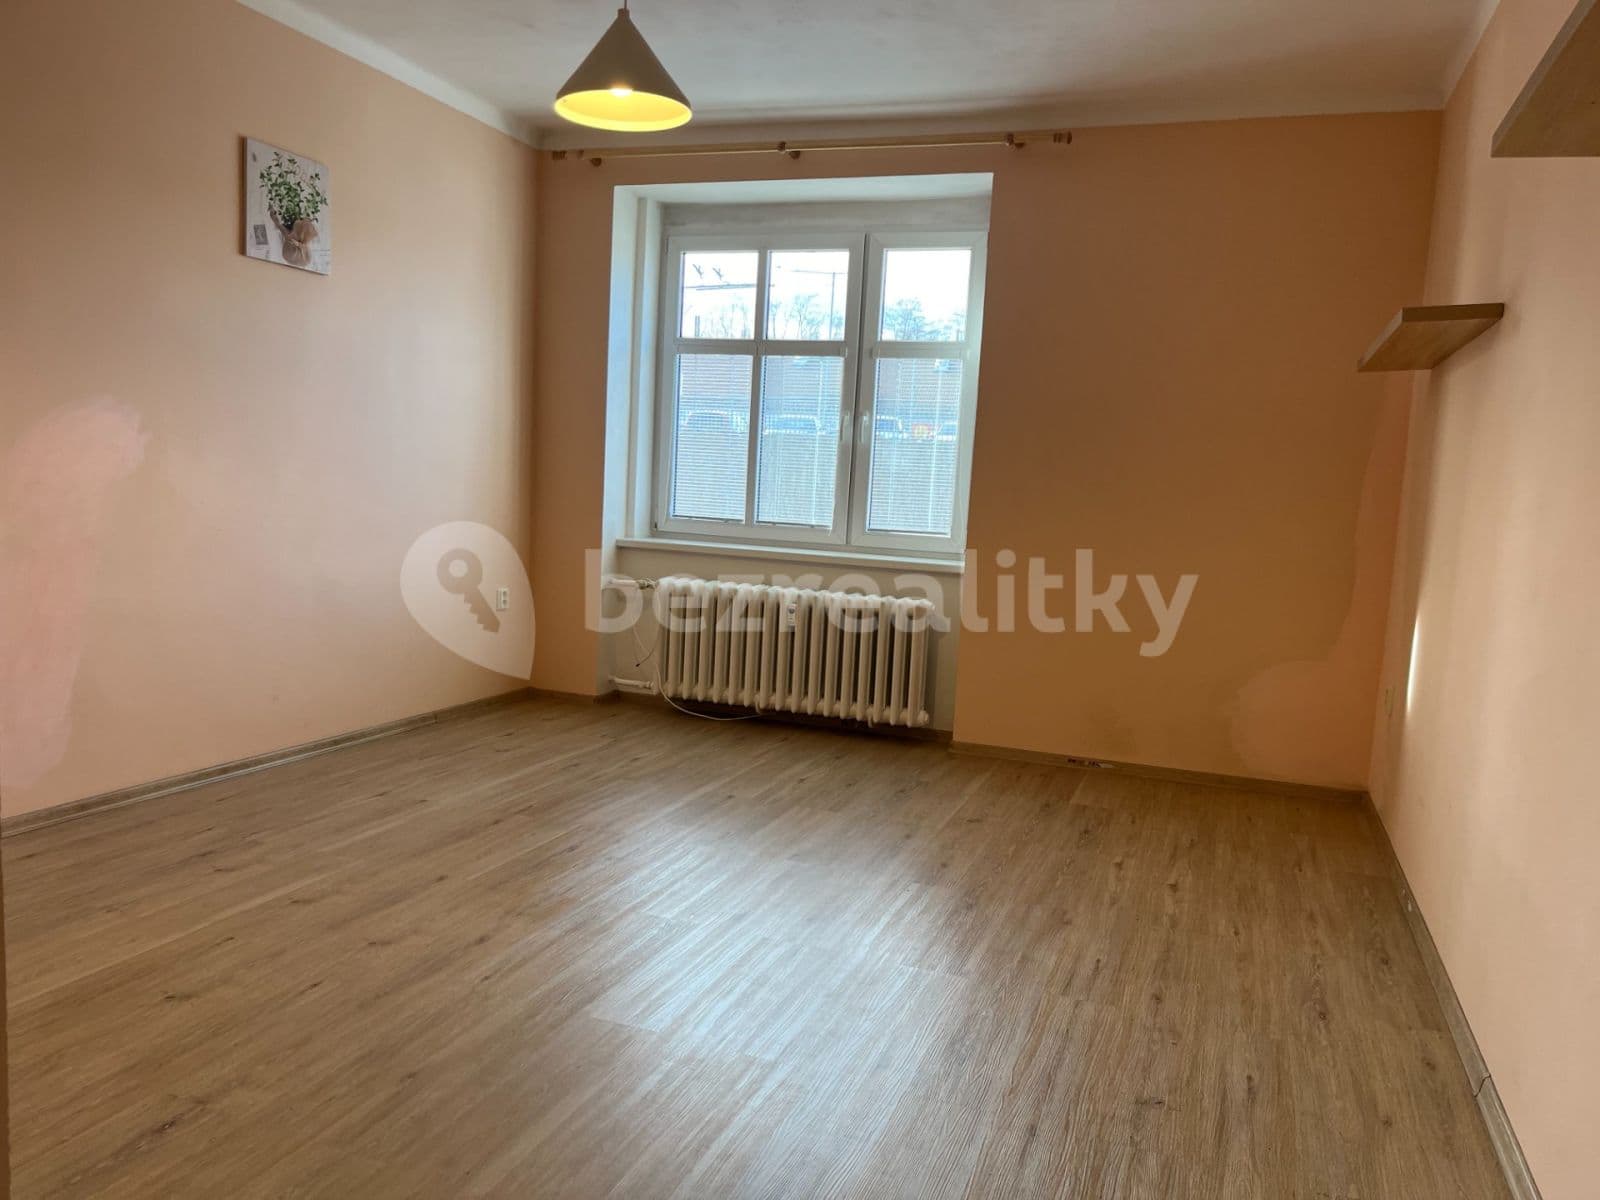 1 bedroom flat to rent, 39 m², Masarykova třída, Teplice, Ústecký Region